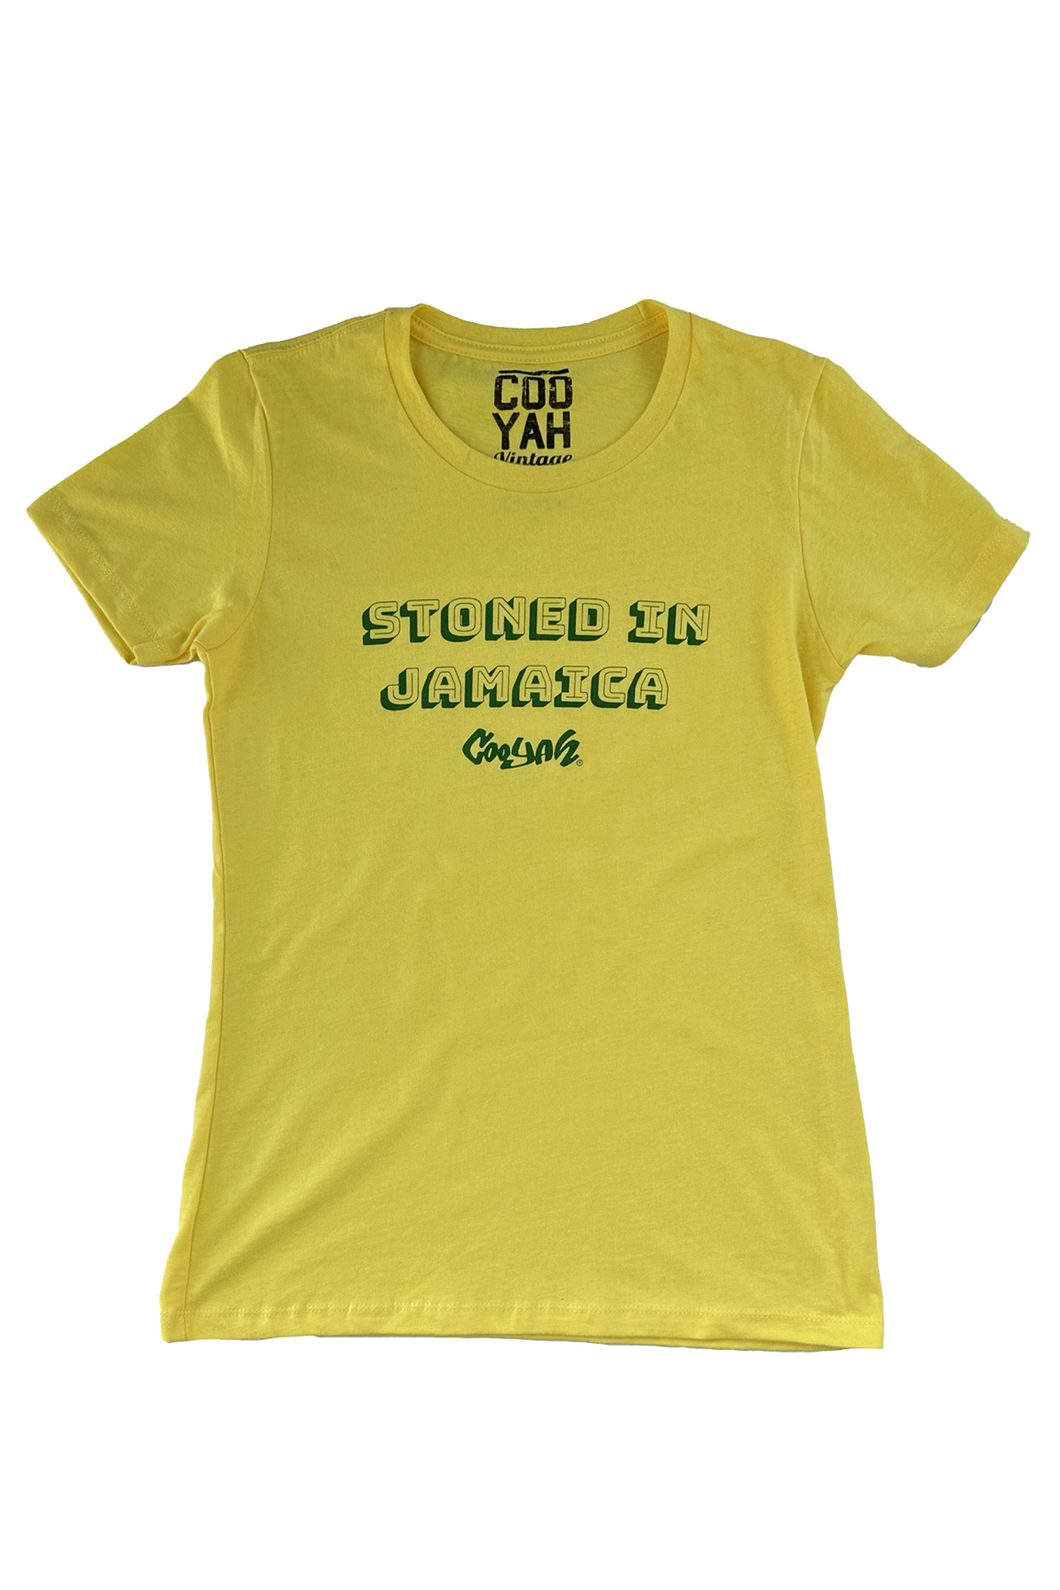 Cooyah Clothing.   Stoned in Jamaica graphic tee.  Yellow, short sleeve, crew neck women's top.  IRIE